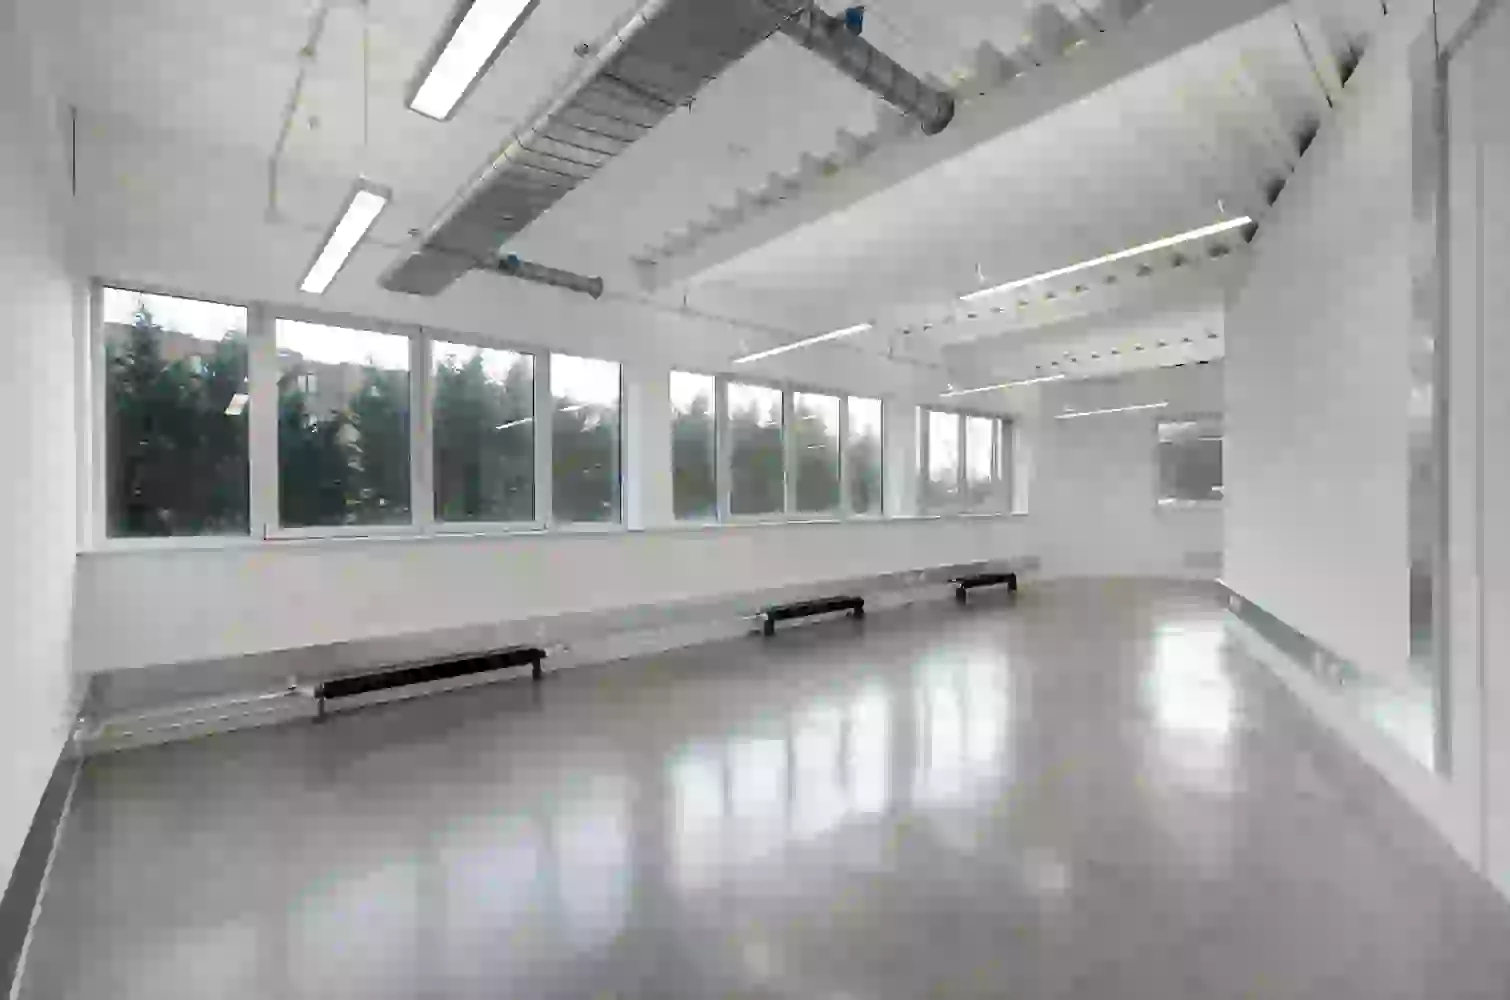 Office space to rent at Westbourne Studios, 242 Acklam Road, Portobello, London, unit WE.101, 689 sq ft (64 sq m).